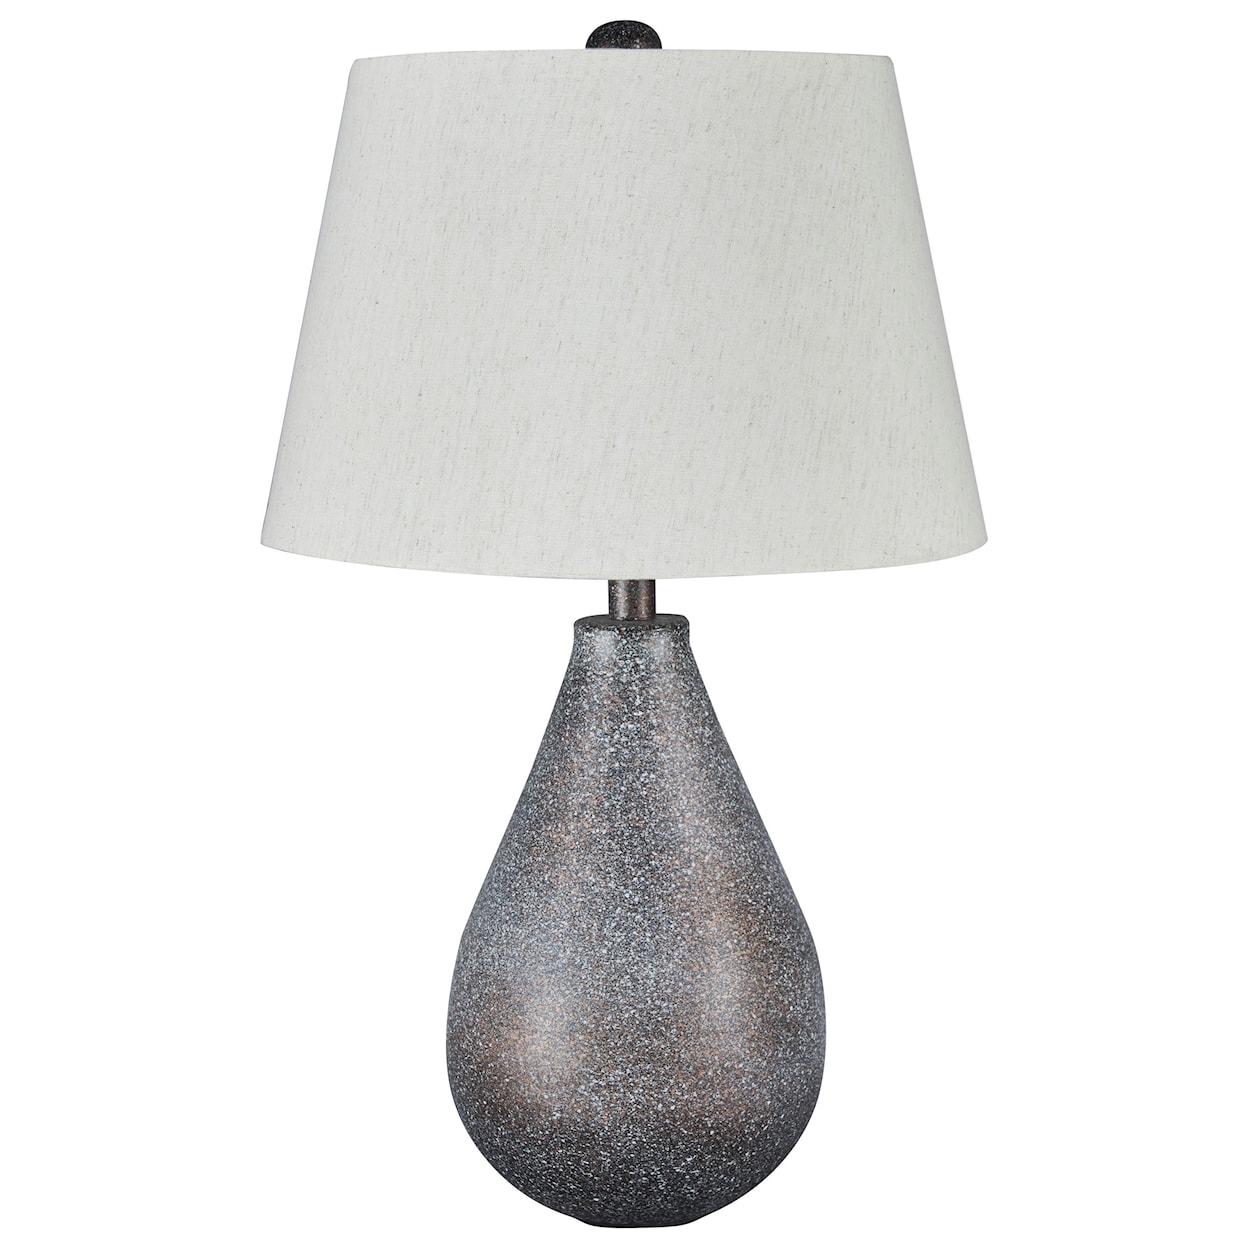 Ashley Furniture Signature Design Lamps - Contemporary Set of 2 Bateman Patina Metal Table Lamps